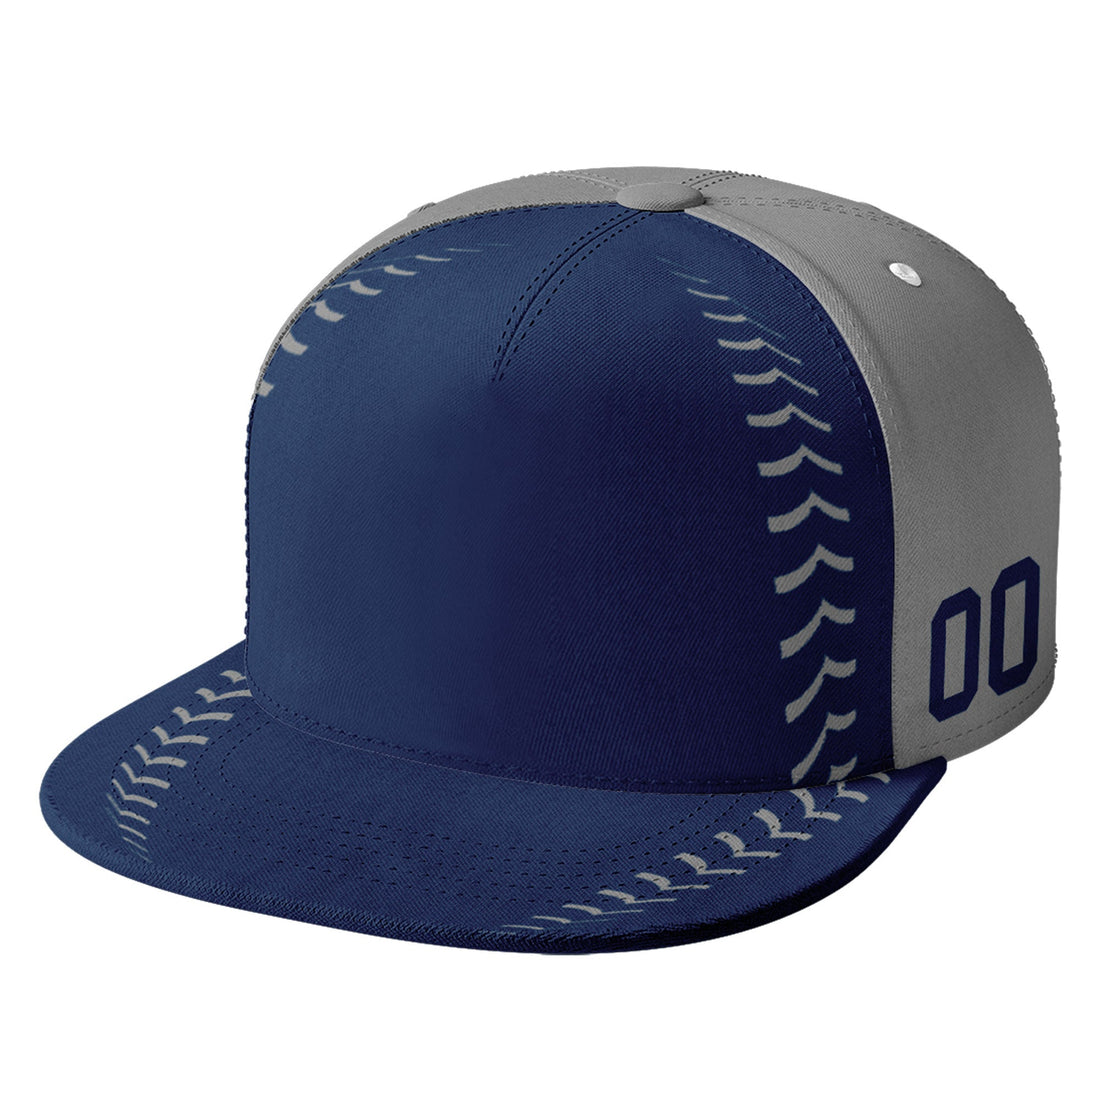 Custom Sport Design Hat Stitched Adjustable Snapback Personalized Baseball Cap PR067B-bd0b00d9-ac